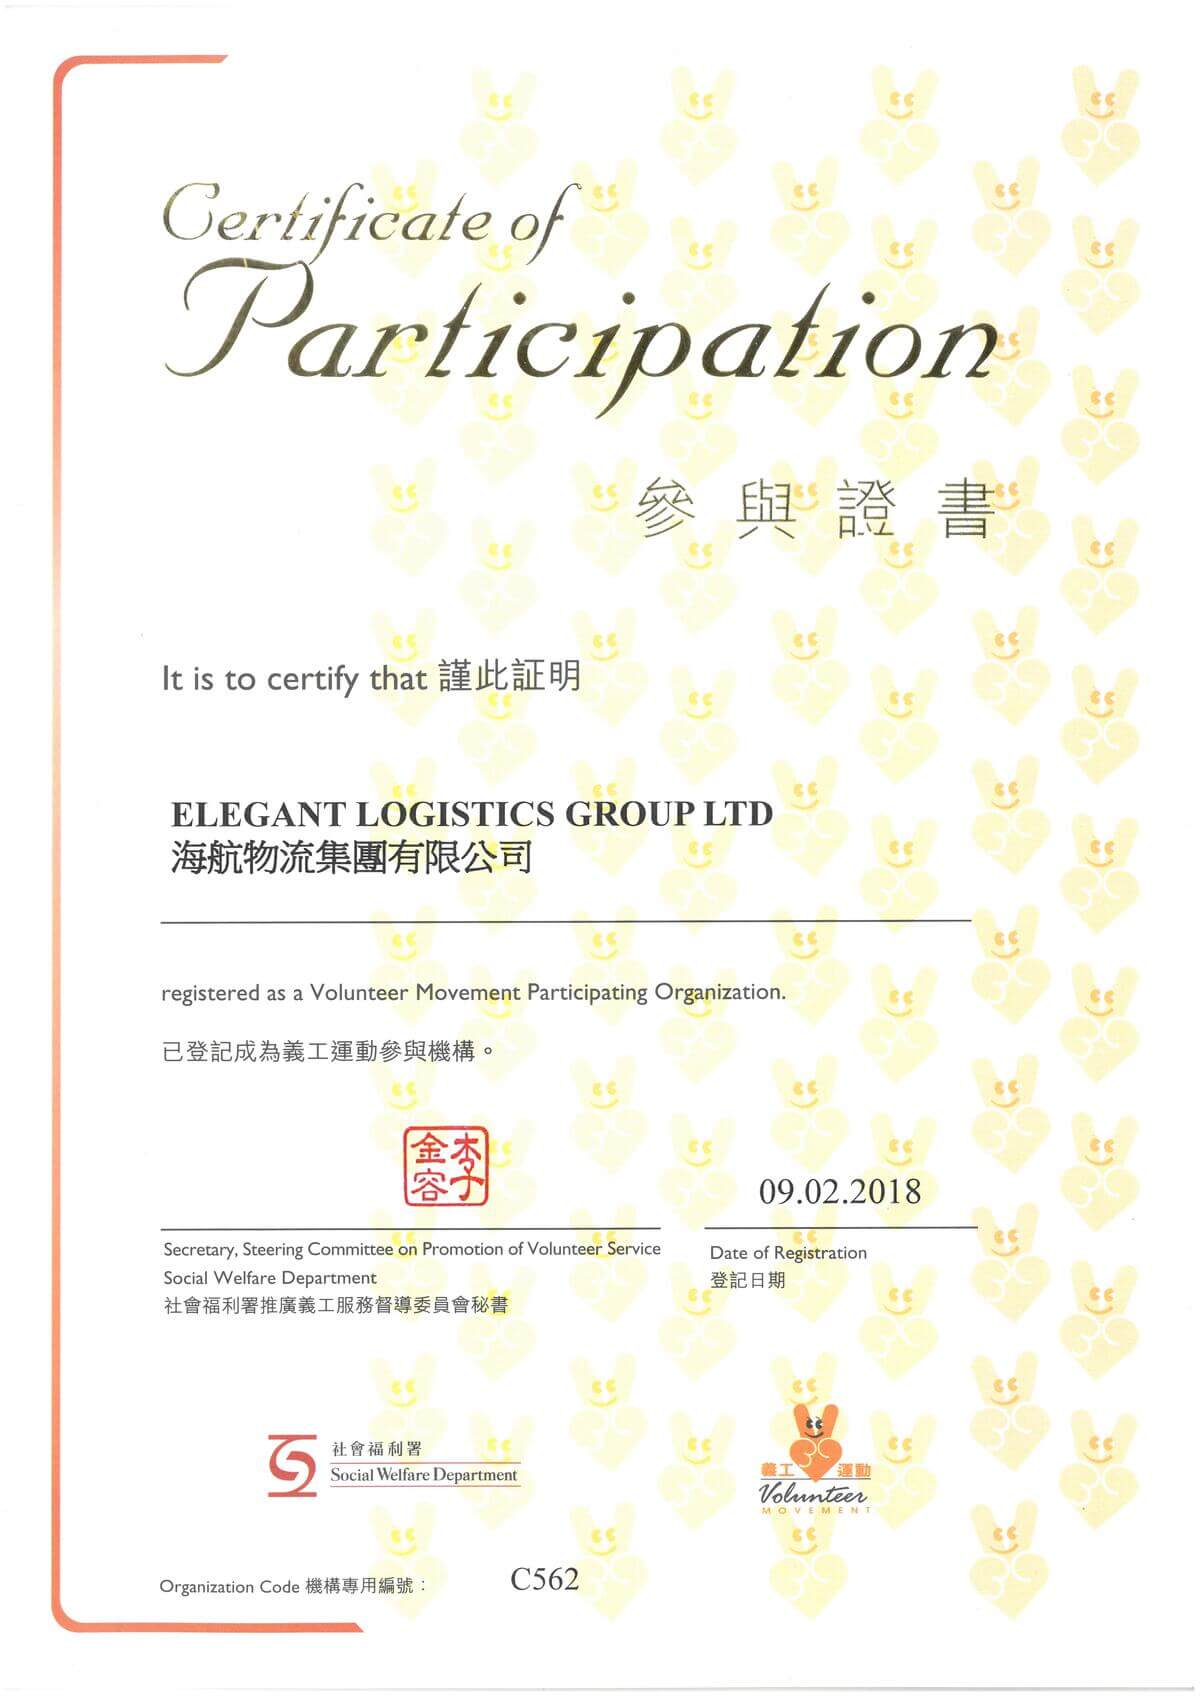 Certificate of Participation - Social Welfare Department